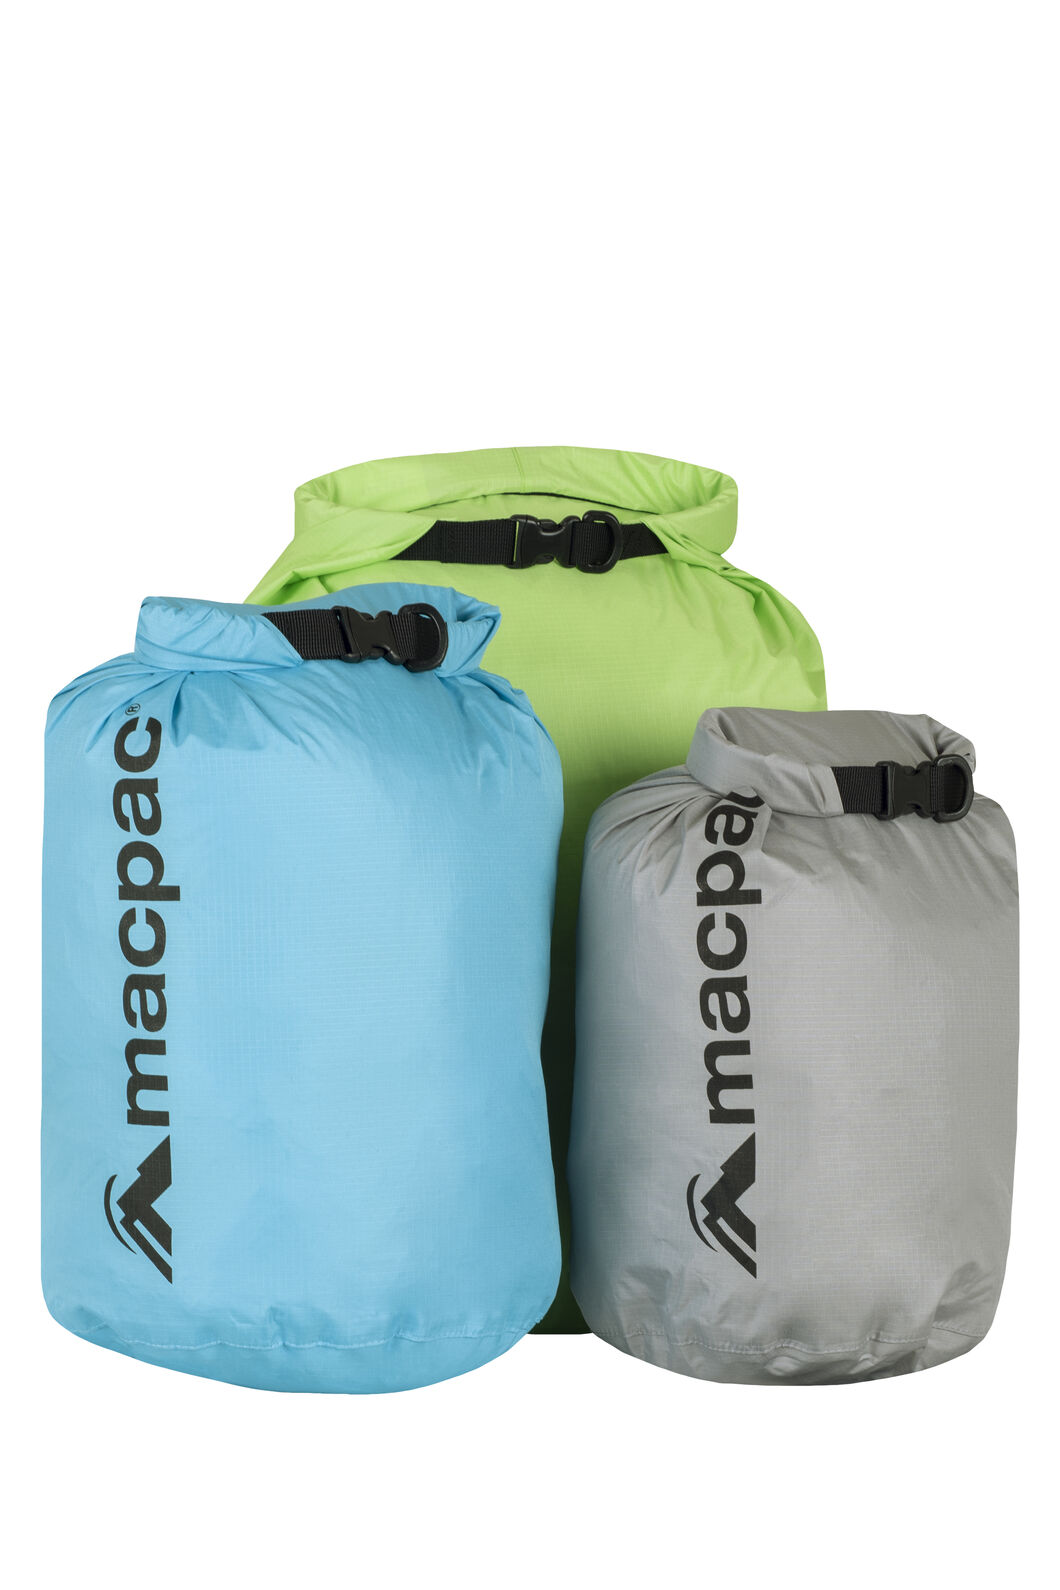 Macpac Lightweight Dry Bags - 3 Pack 5/10/15L